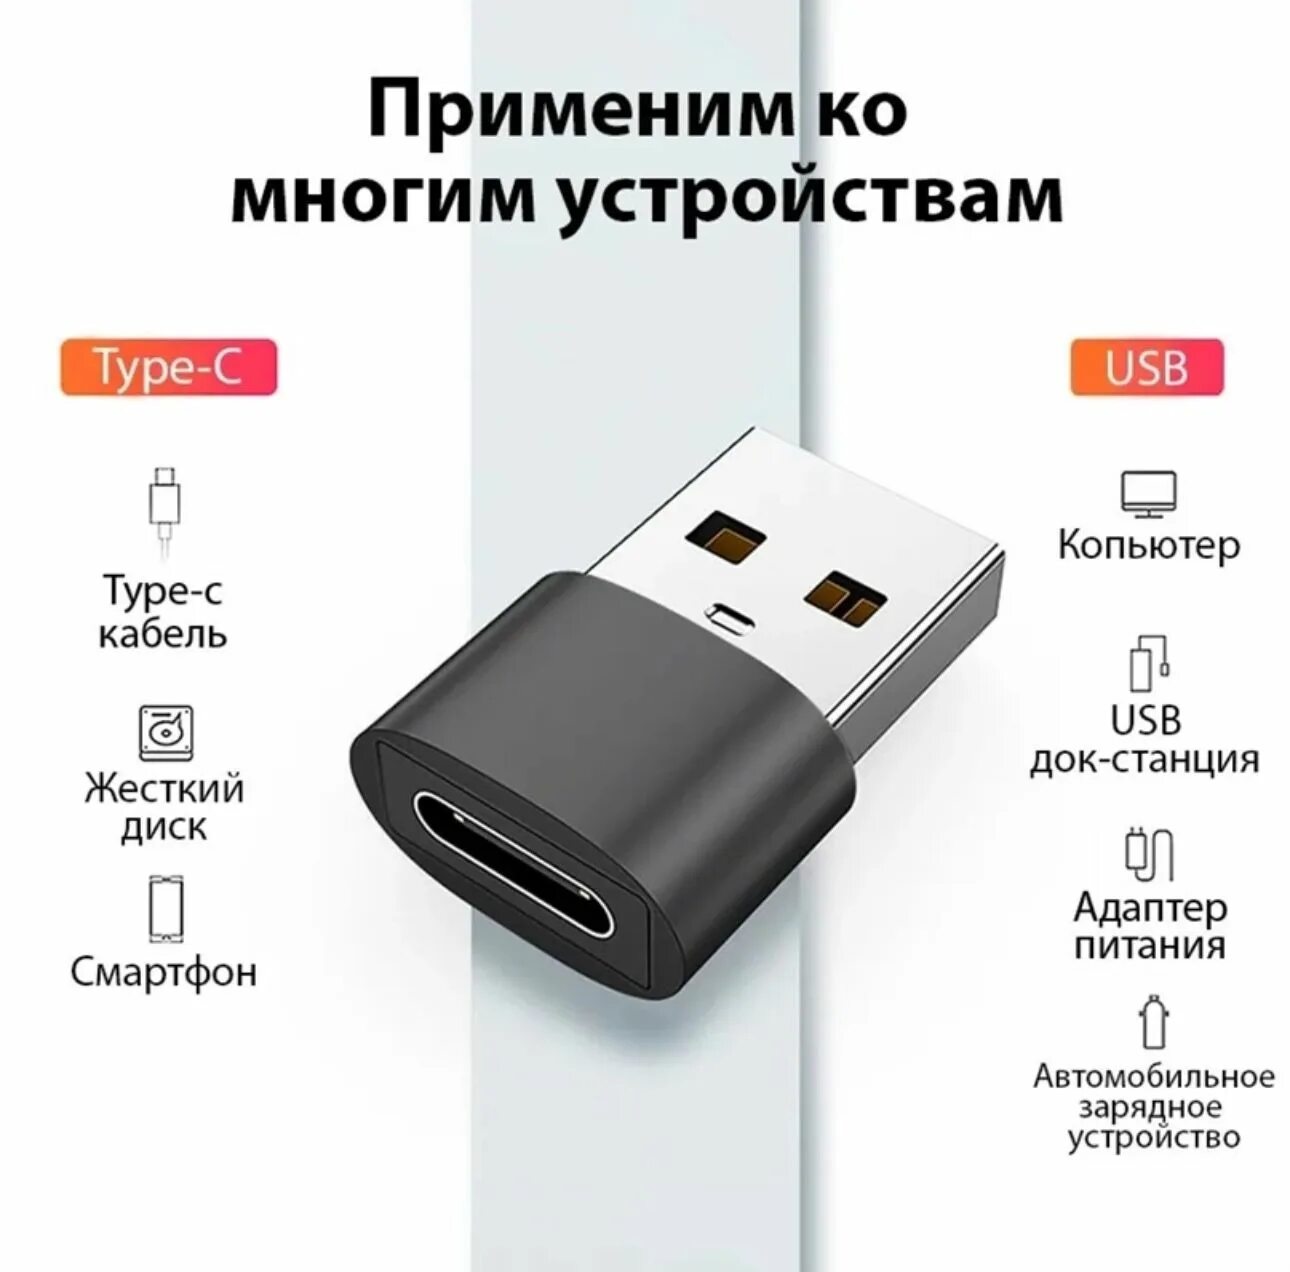 Купить переходник с type на микро usb. Переходник USB 3.0 - Type-c. OTG переходник USB - Type-c. Универсальный переходник Type c на USB И микро usb6 в 1. 2 USB юсб на тайп си переходник.